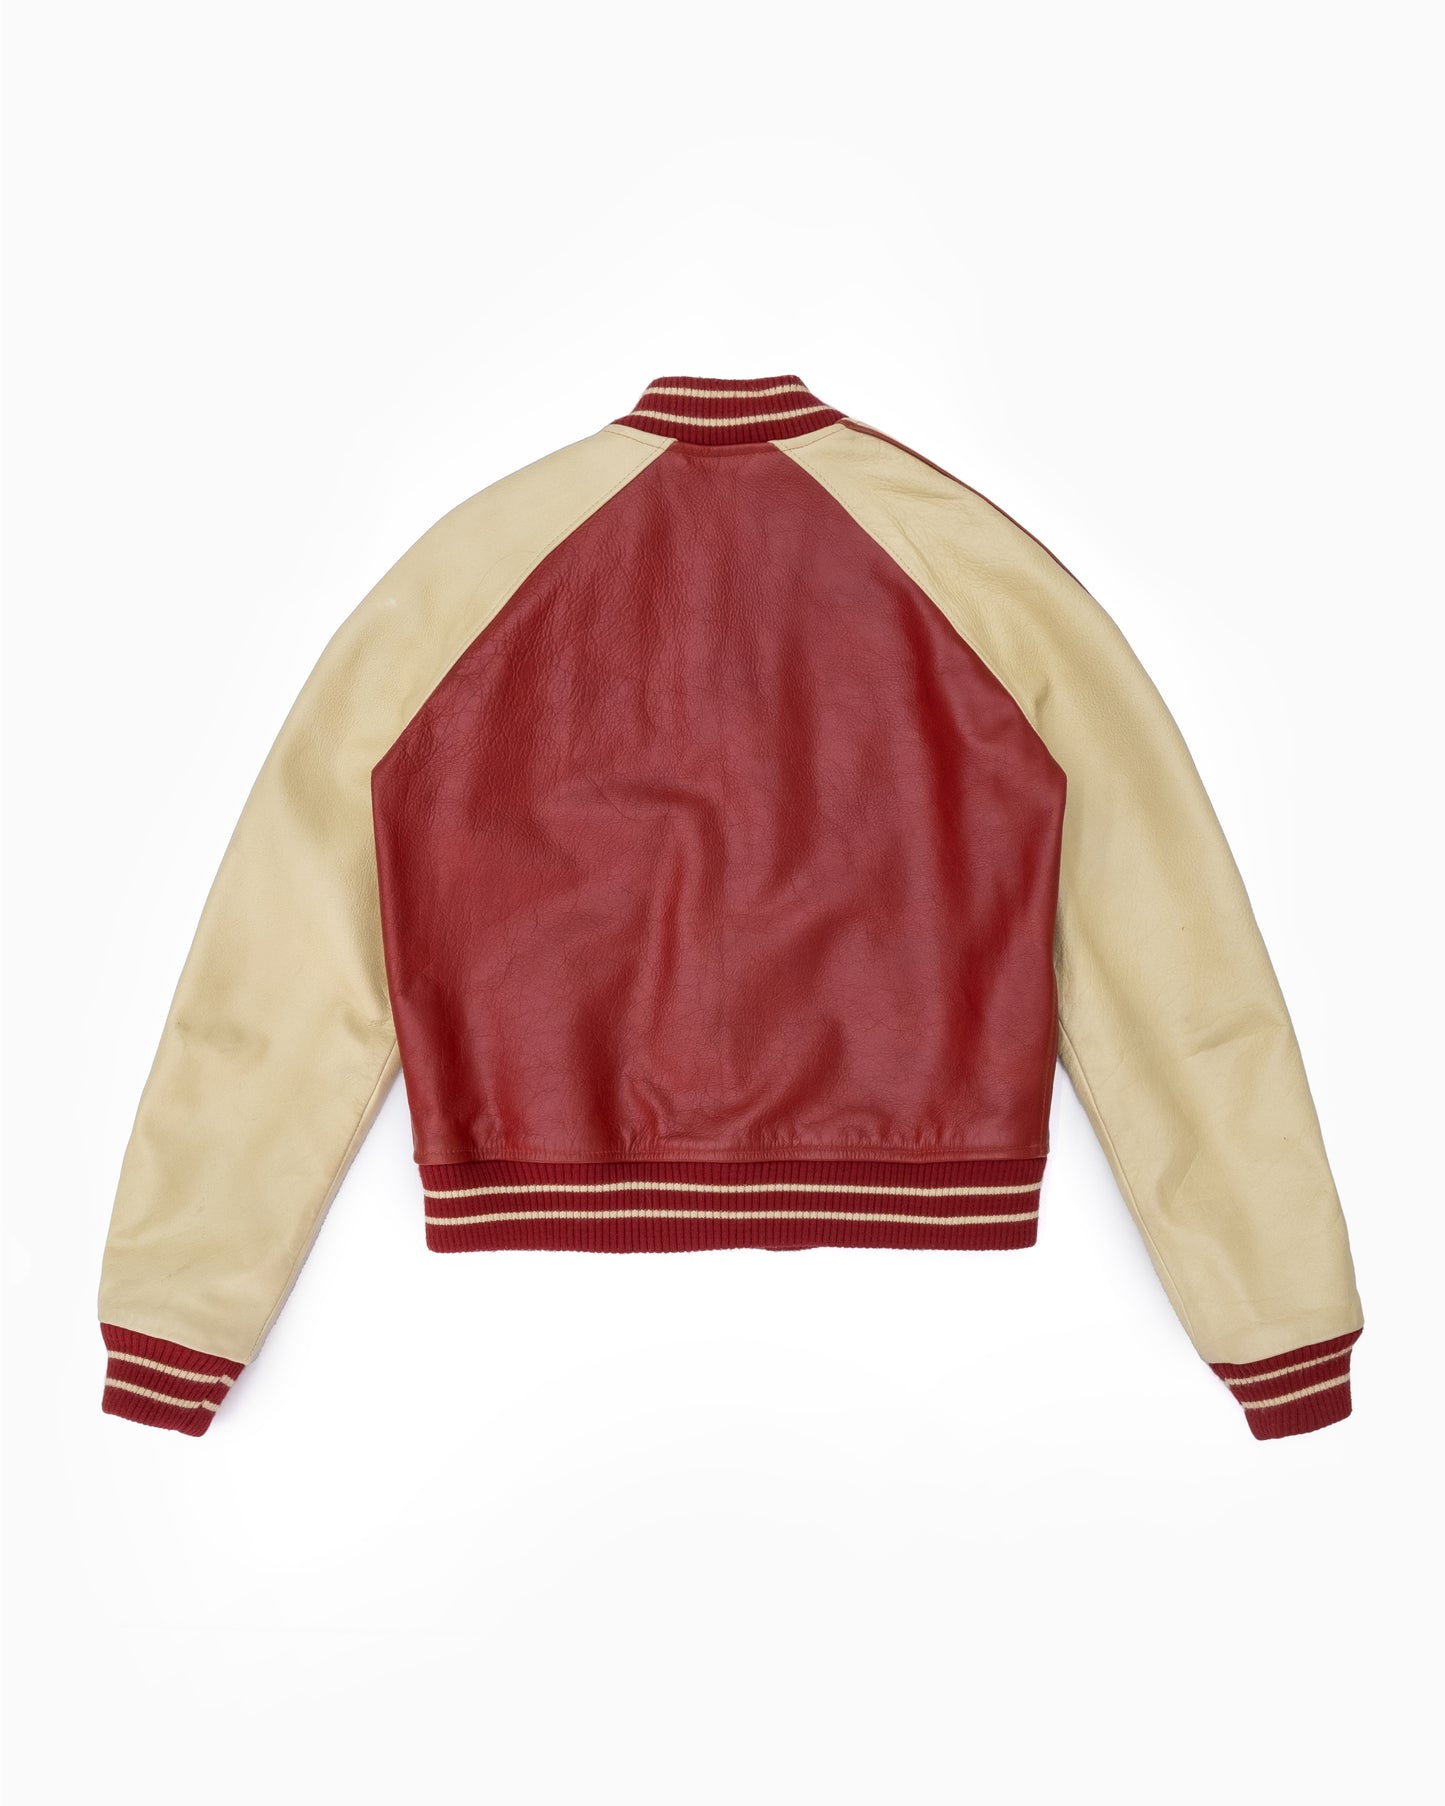 Redskins Leather Varsity Jacket